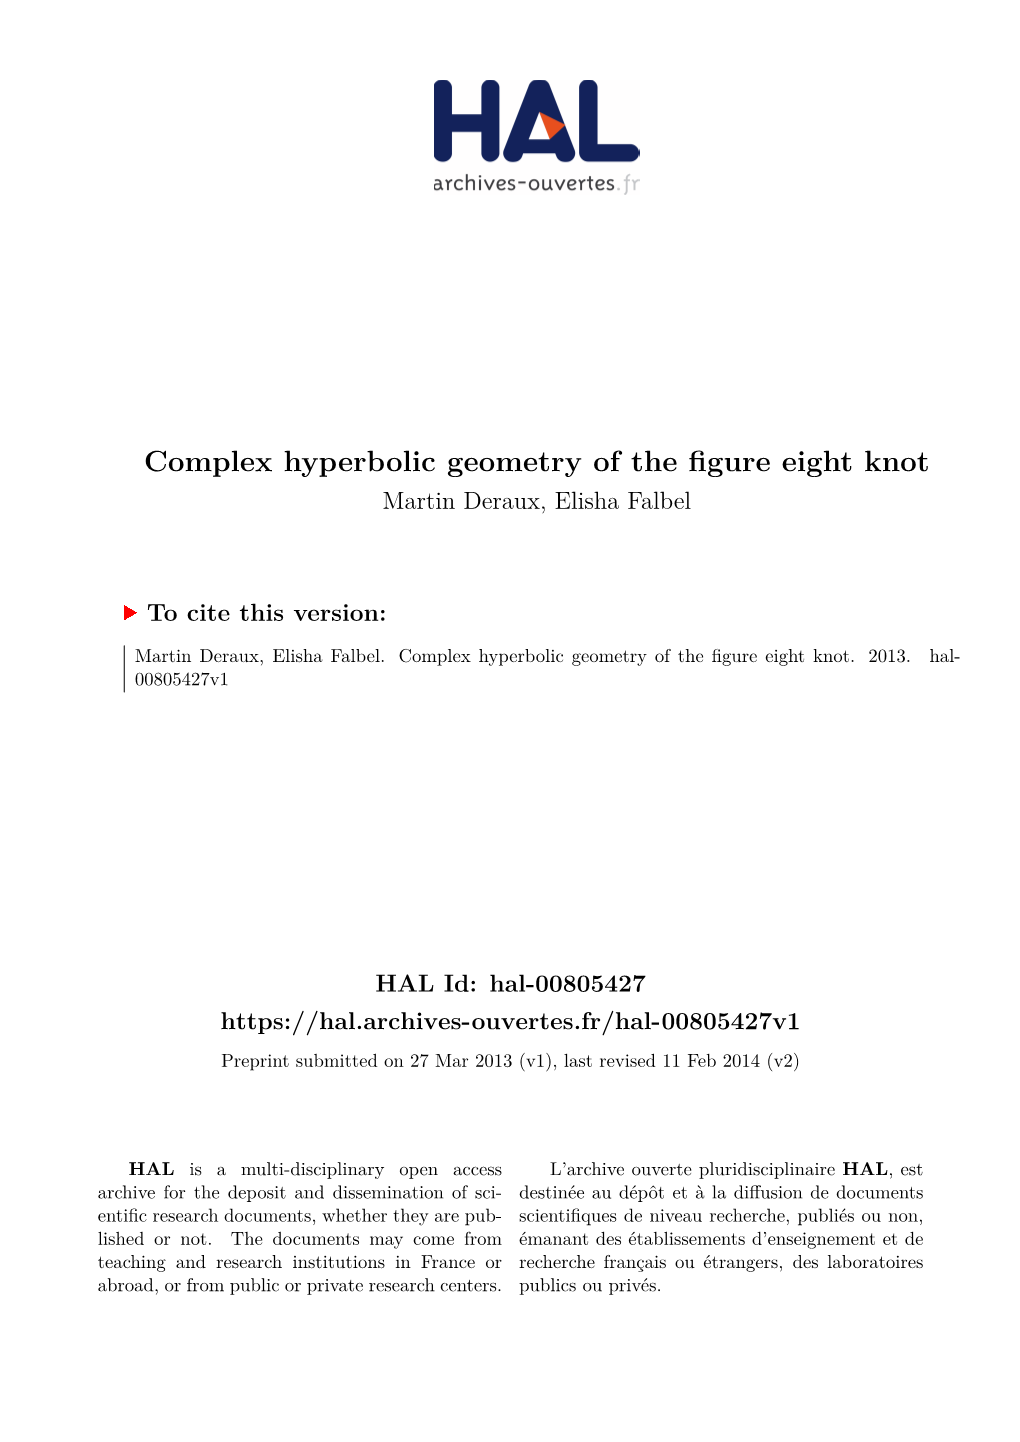 Complex Hyperbolic Geometry of the Figure Eight Knot Martin Deraux, Elisha Falbel